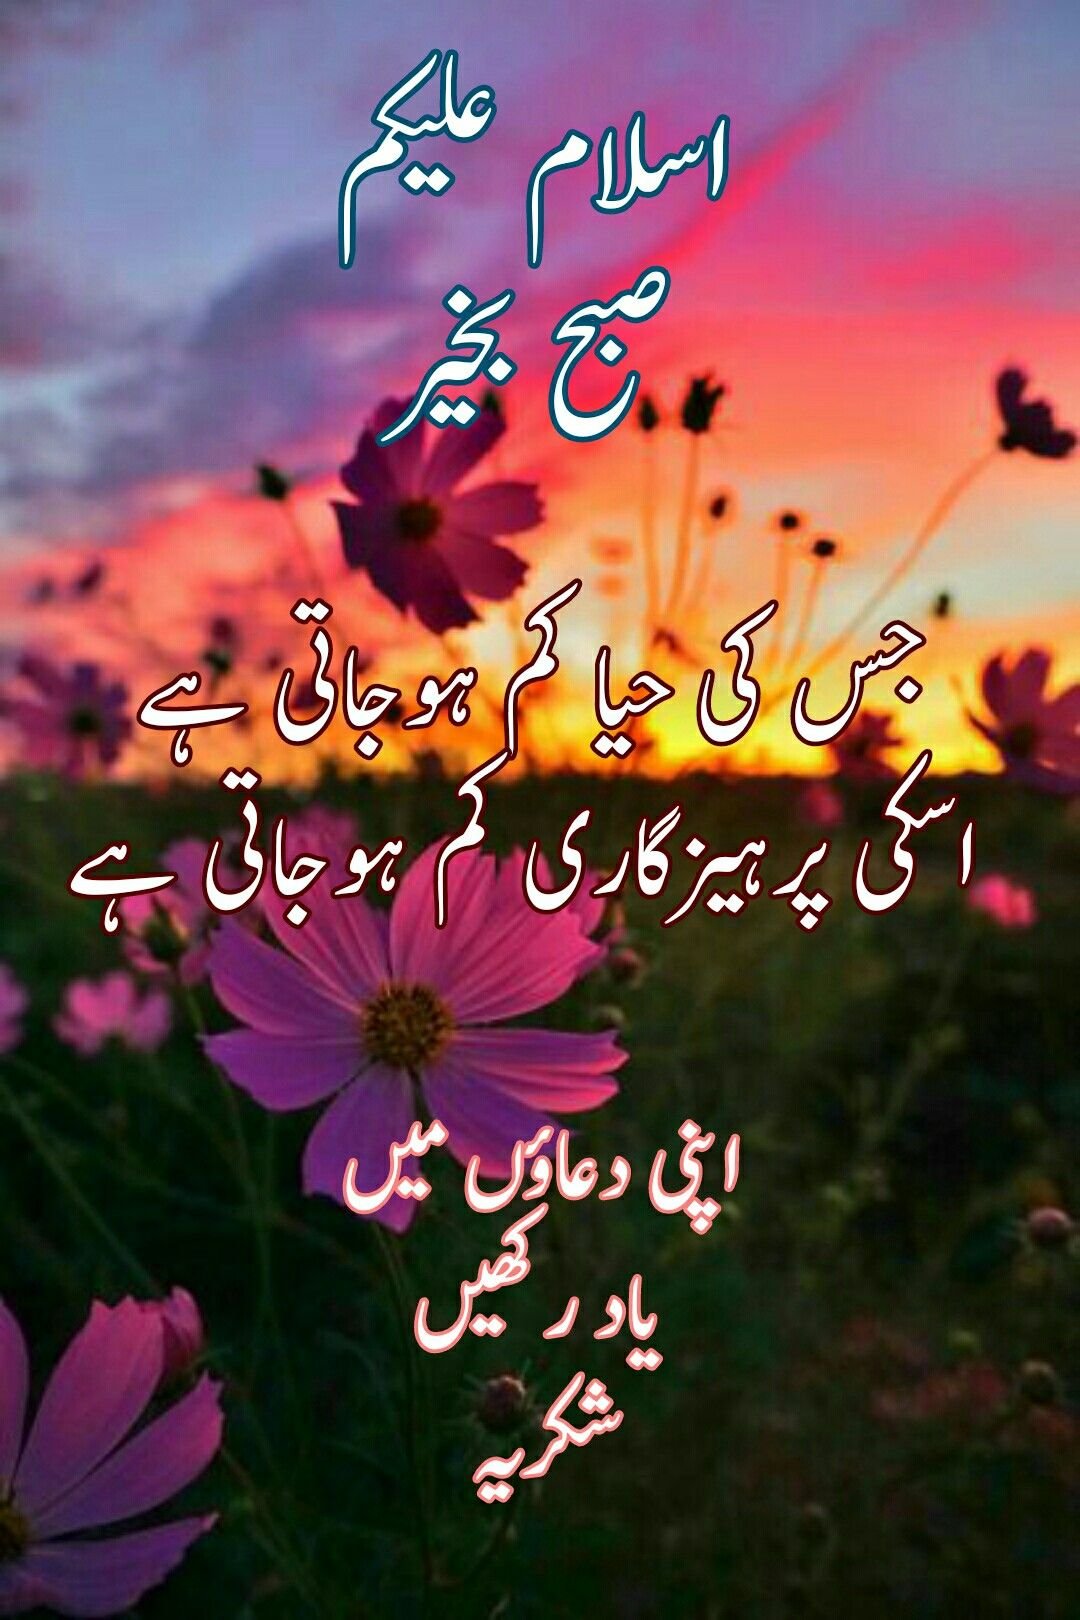 Good Morning Images In Urdu Words